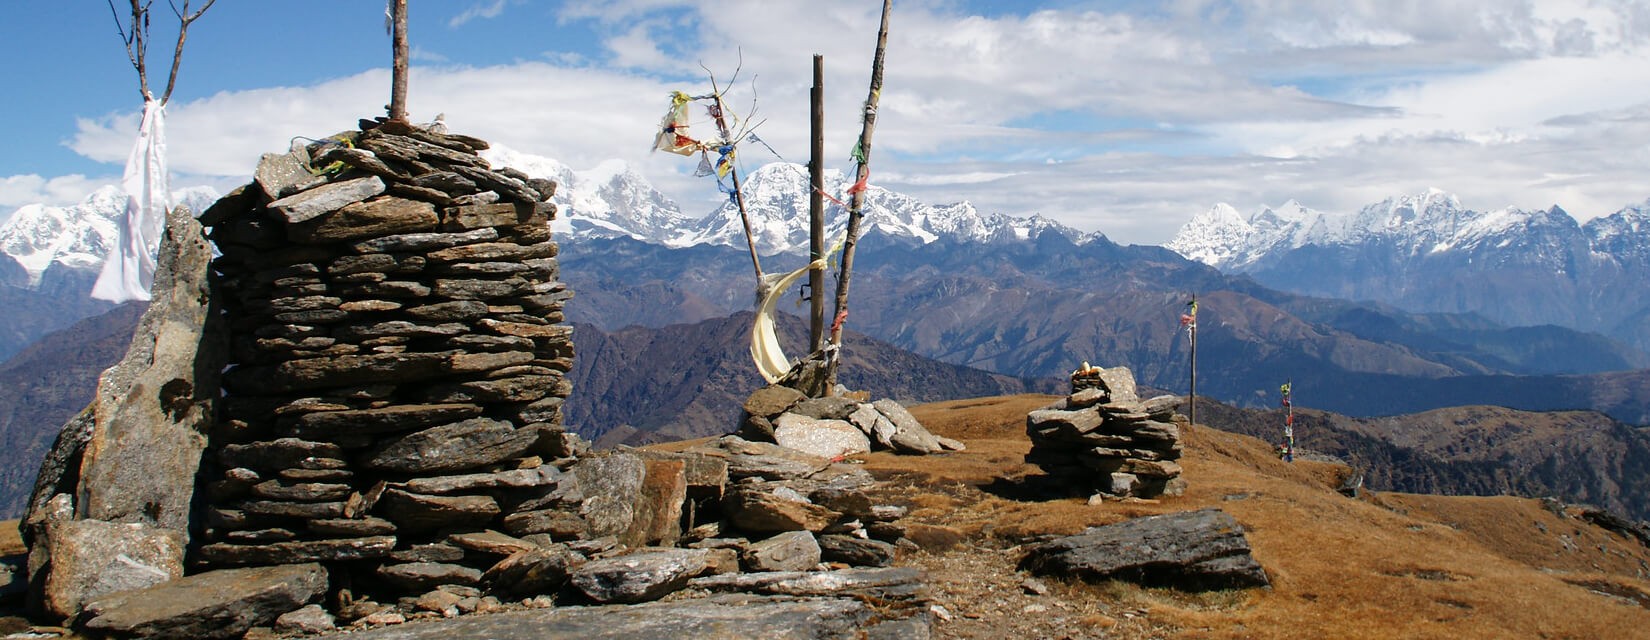 Pikey Peak View - Winter Trek in Nepal